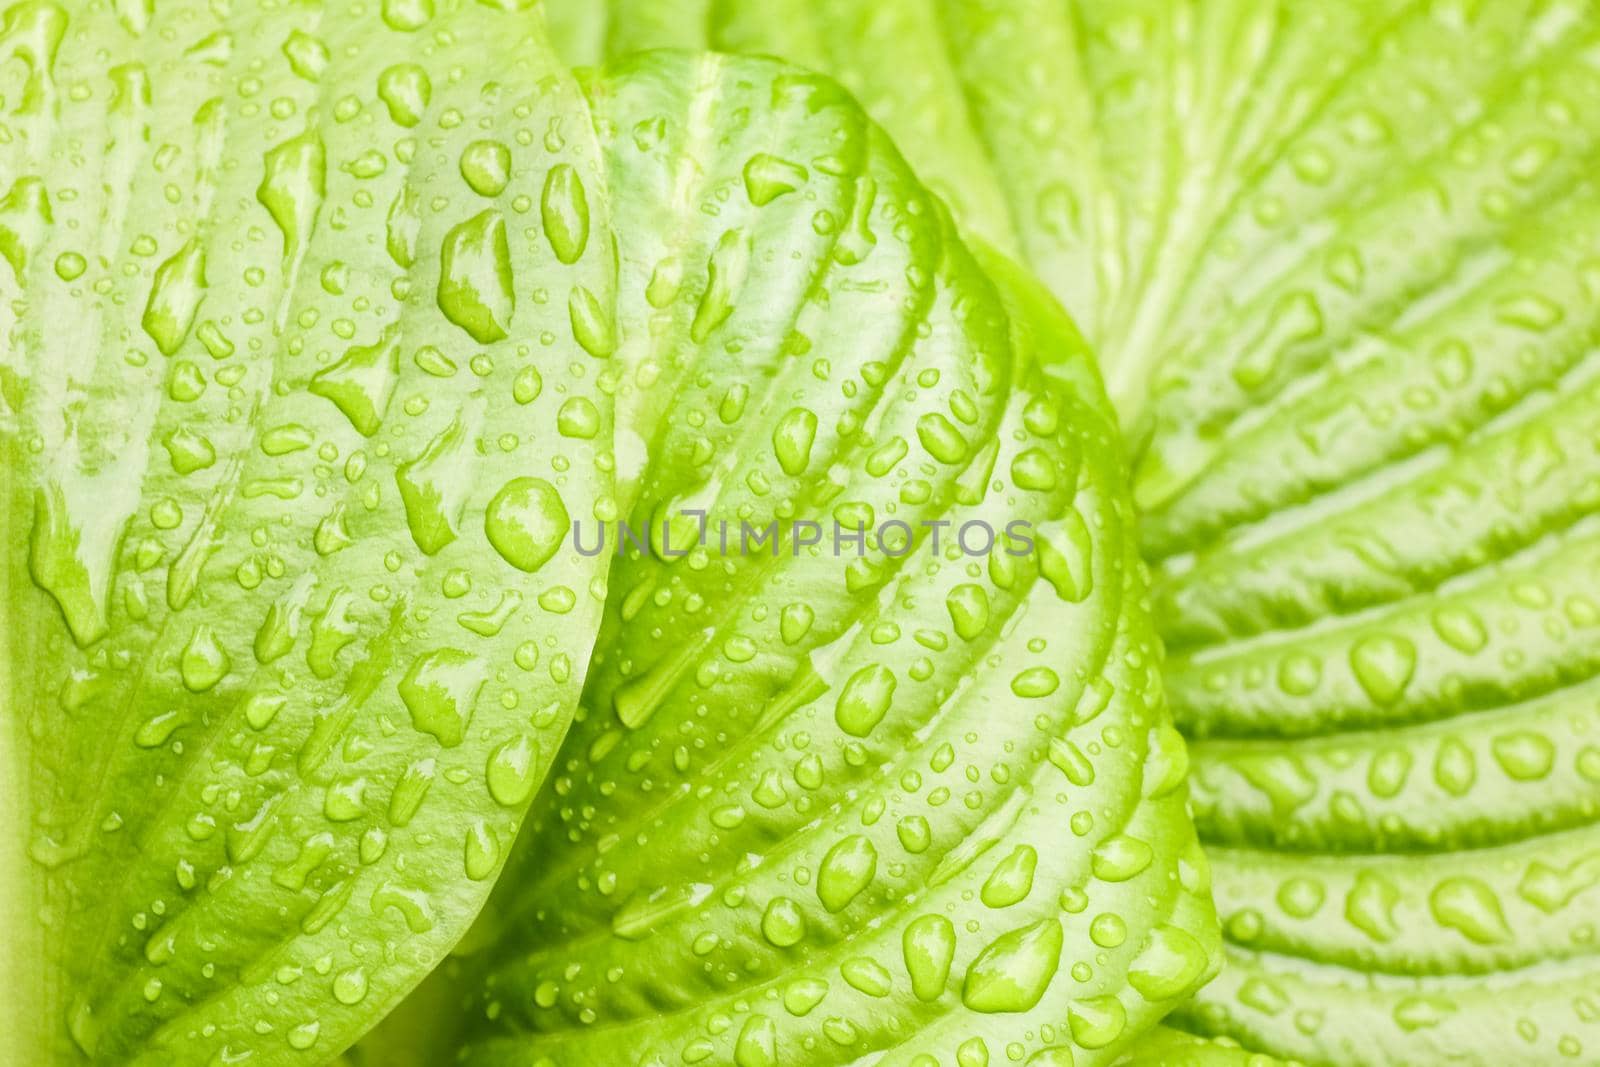 green Hosta leaf with rain drops close-up. High quality photo